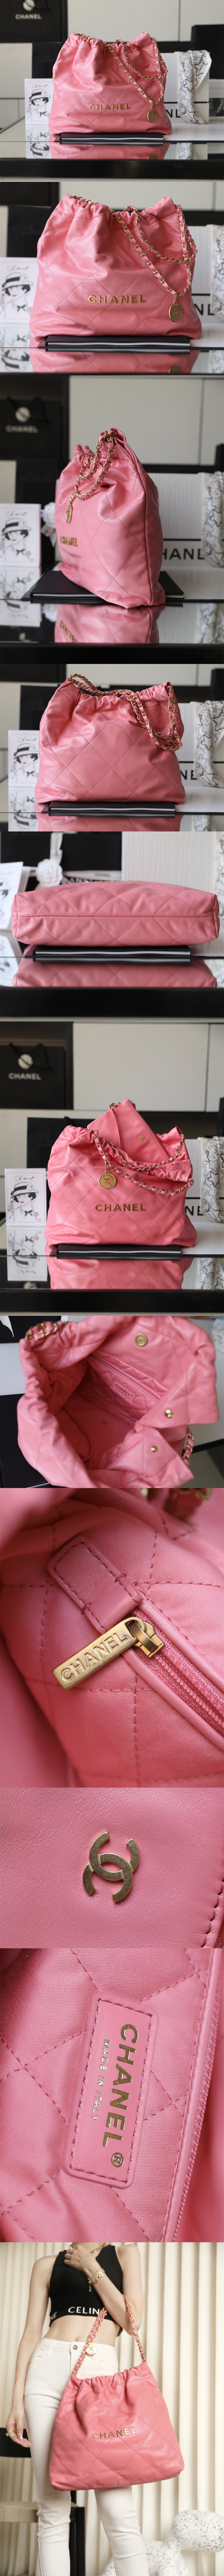 Chanel春夏火爆22 bag購物袋0